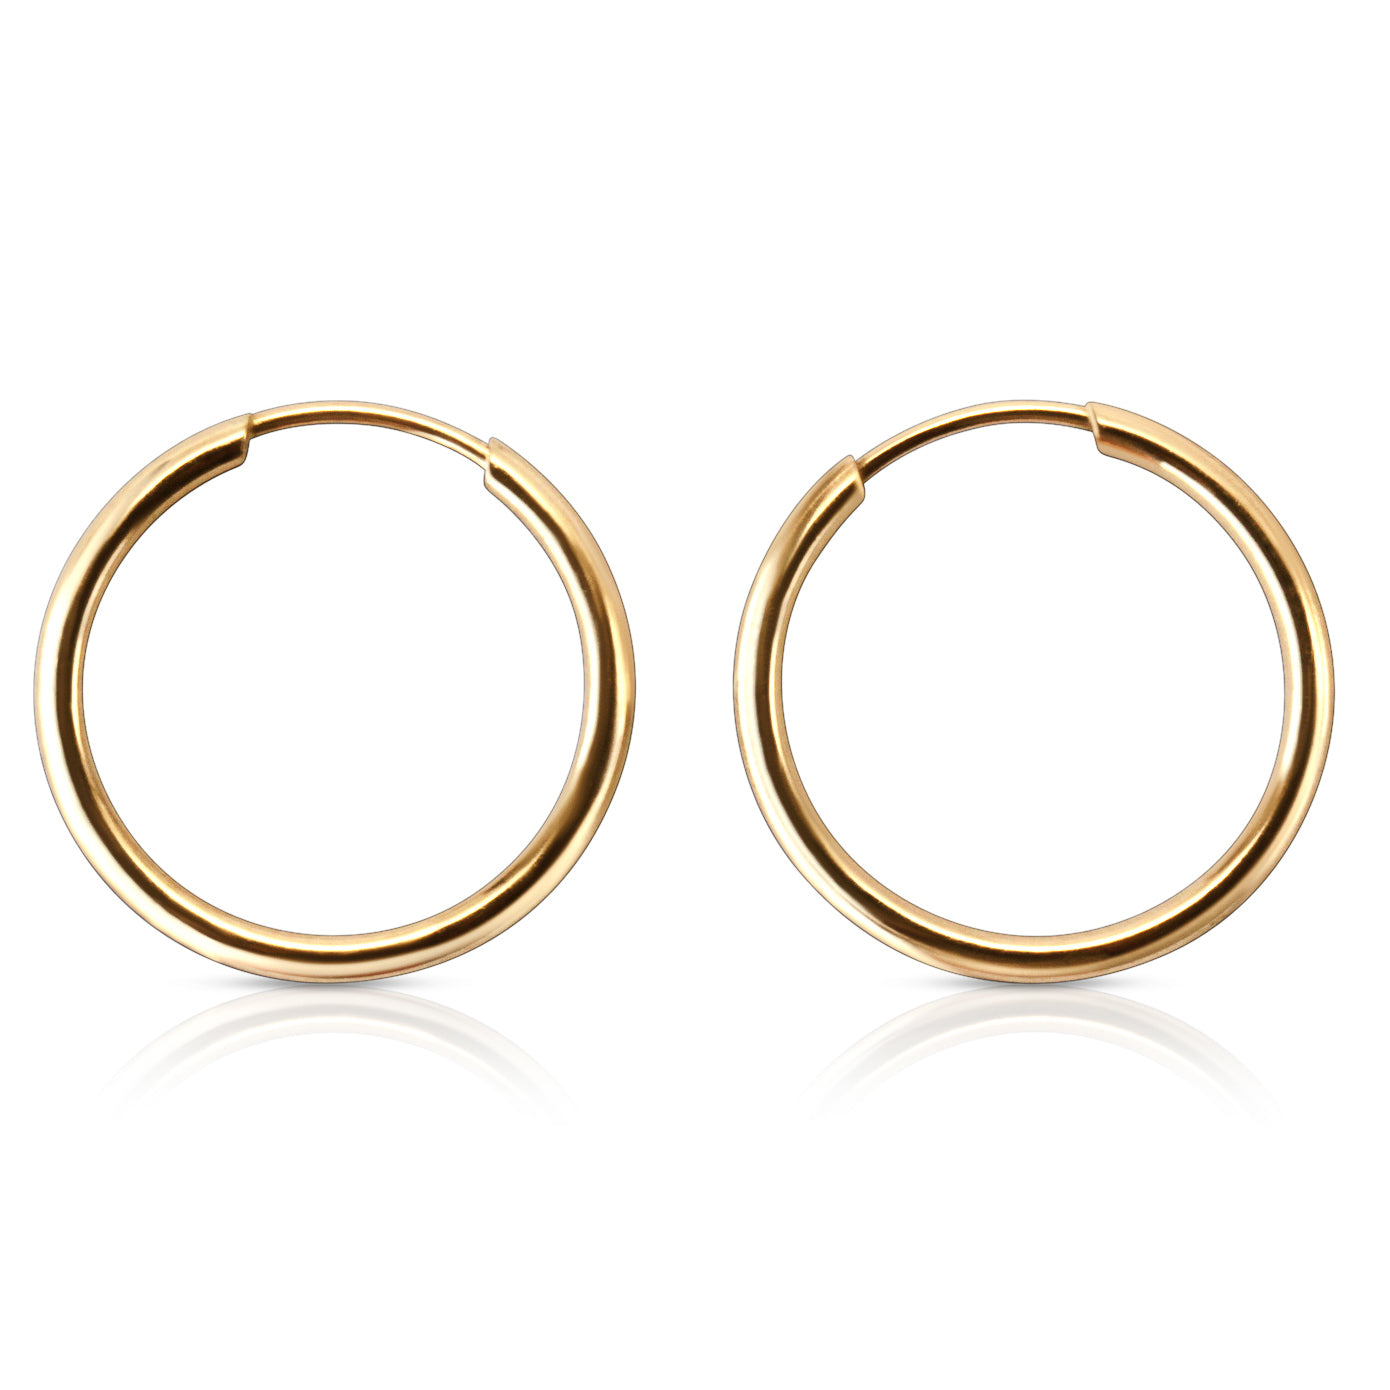 Mini gold hoops earrings front angle